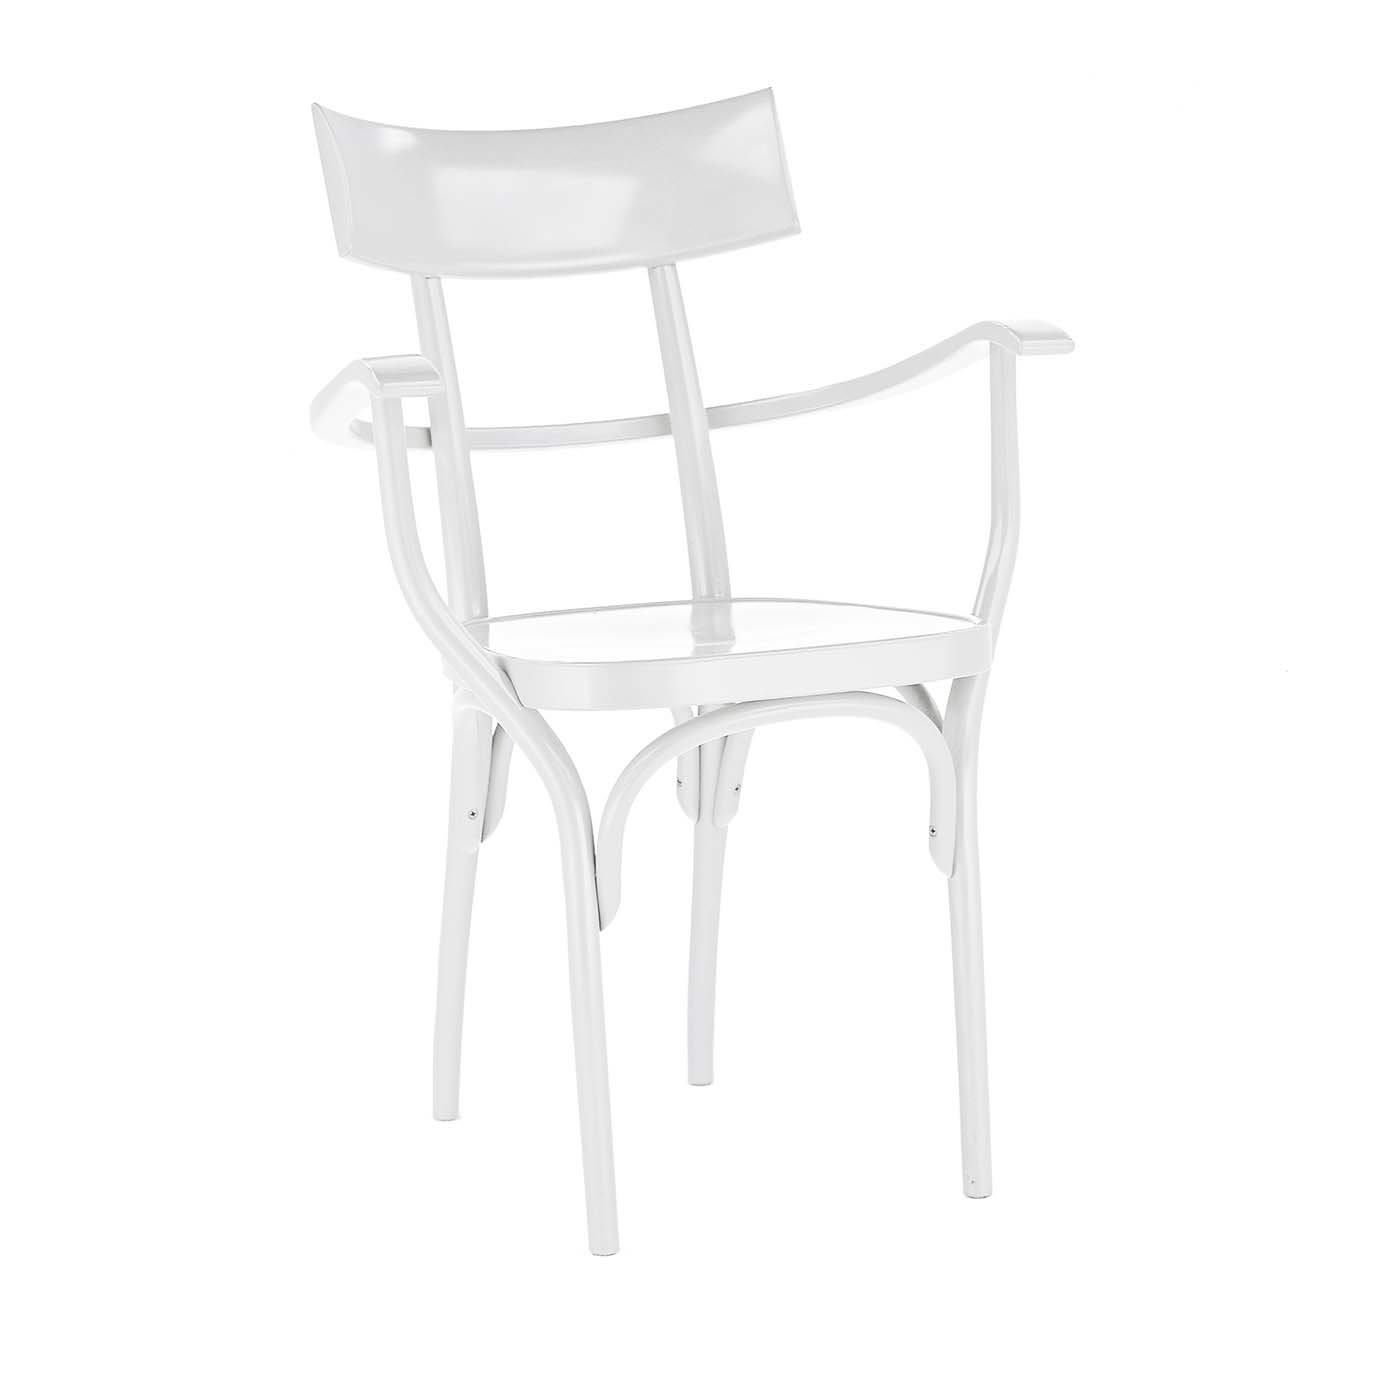 Czech White Chair by Hermann Czech #2 - Gebrüder Thonet Vienna GmbH (GTV) – Wiener GTV Design